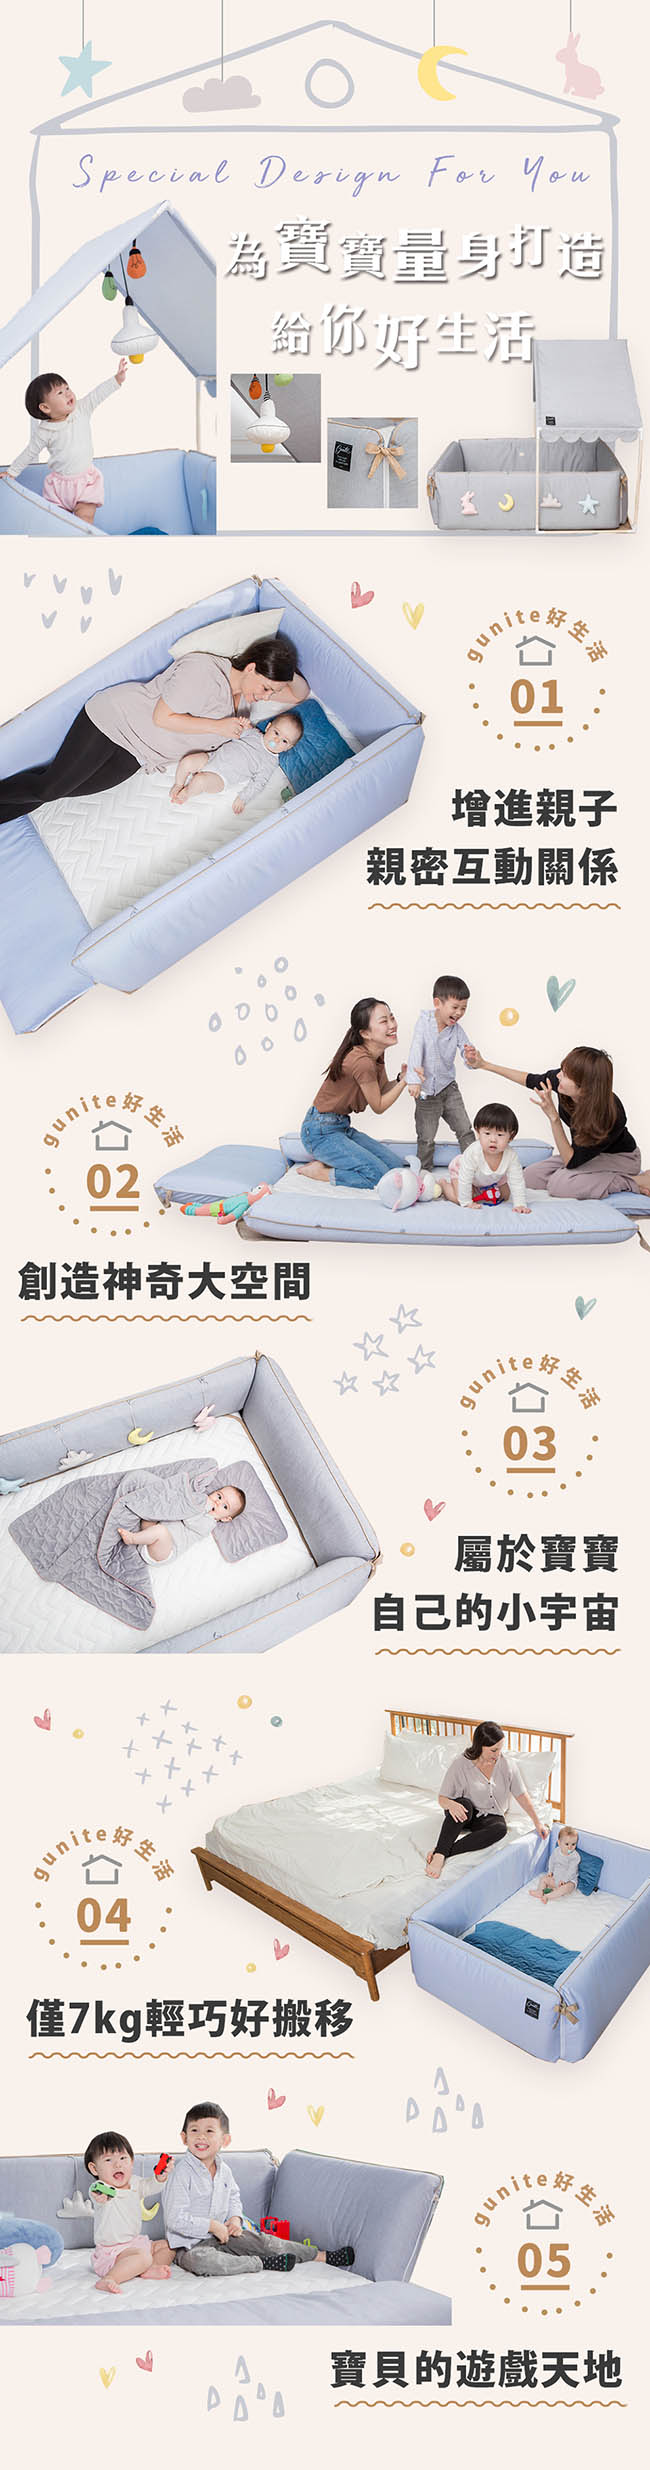 gunite 沙發嬰兒床-安撫陪睡式0-6歲(丹麥藍)